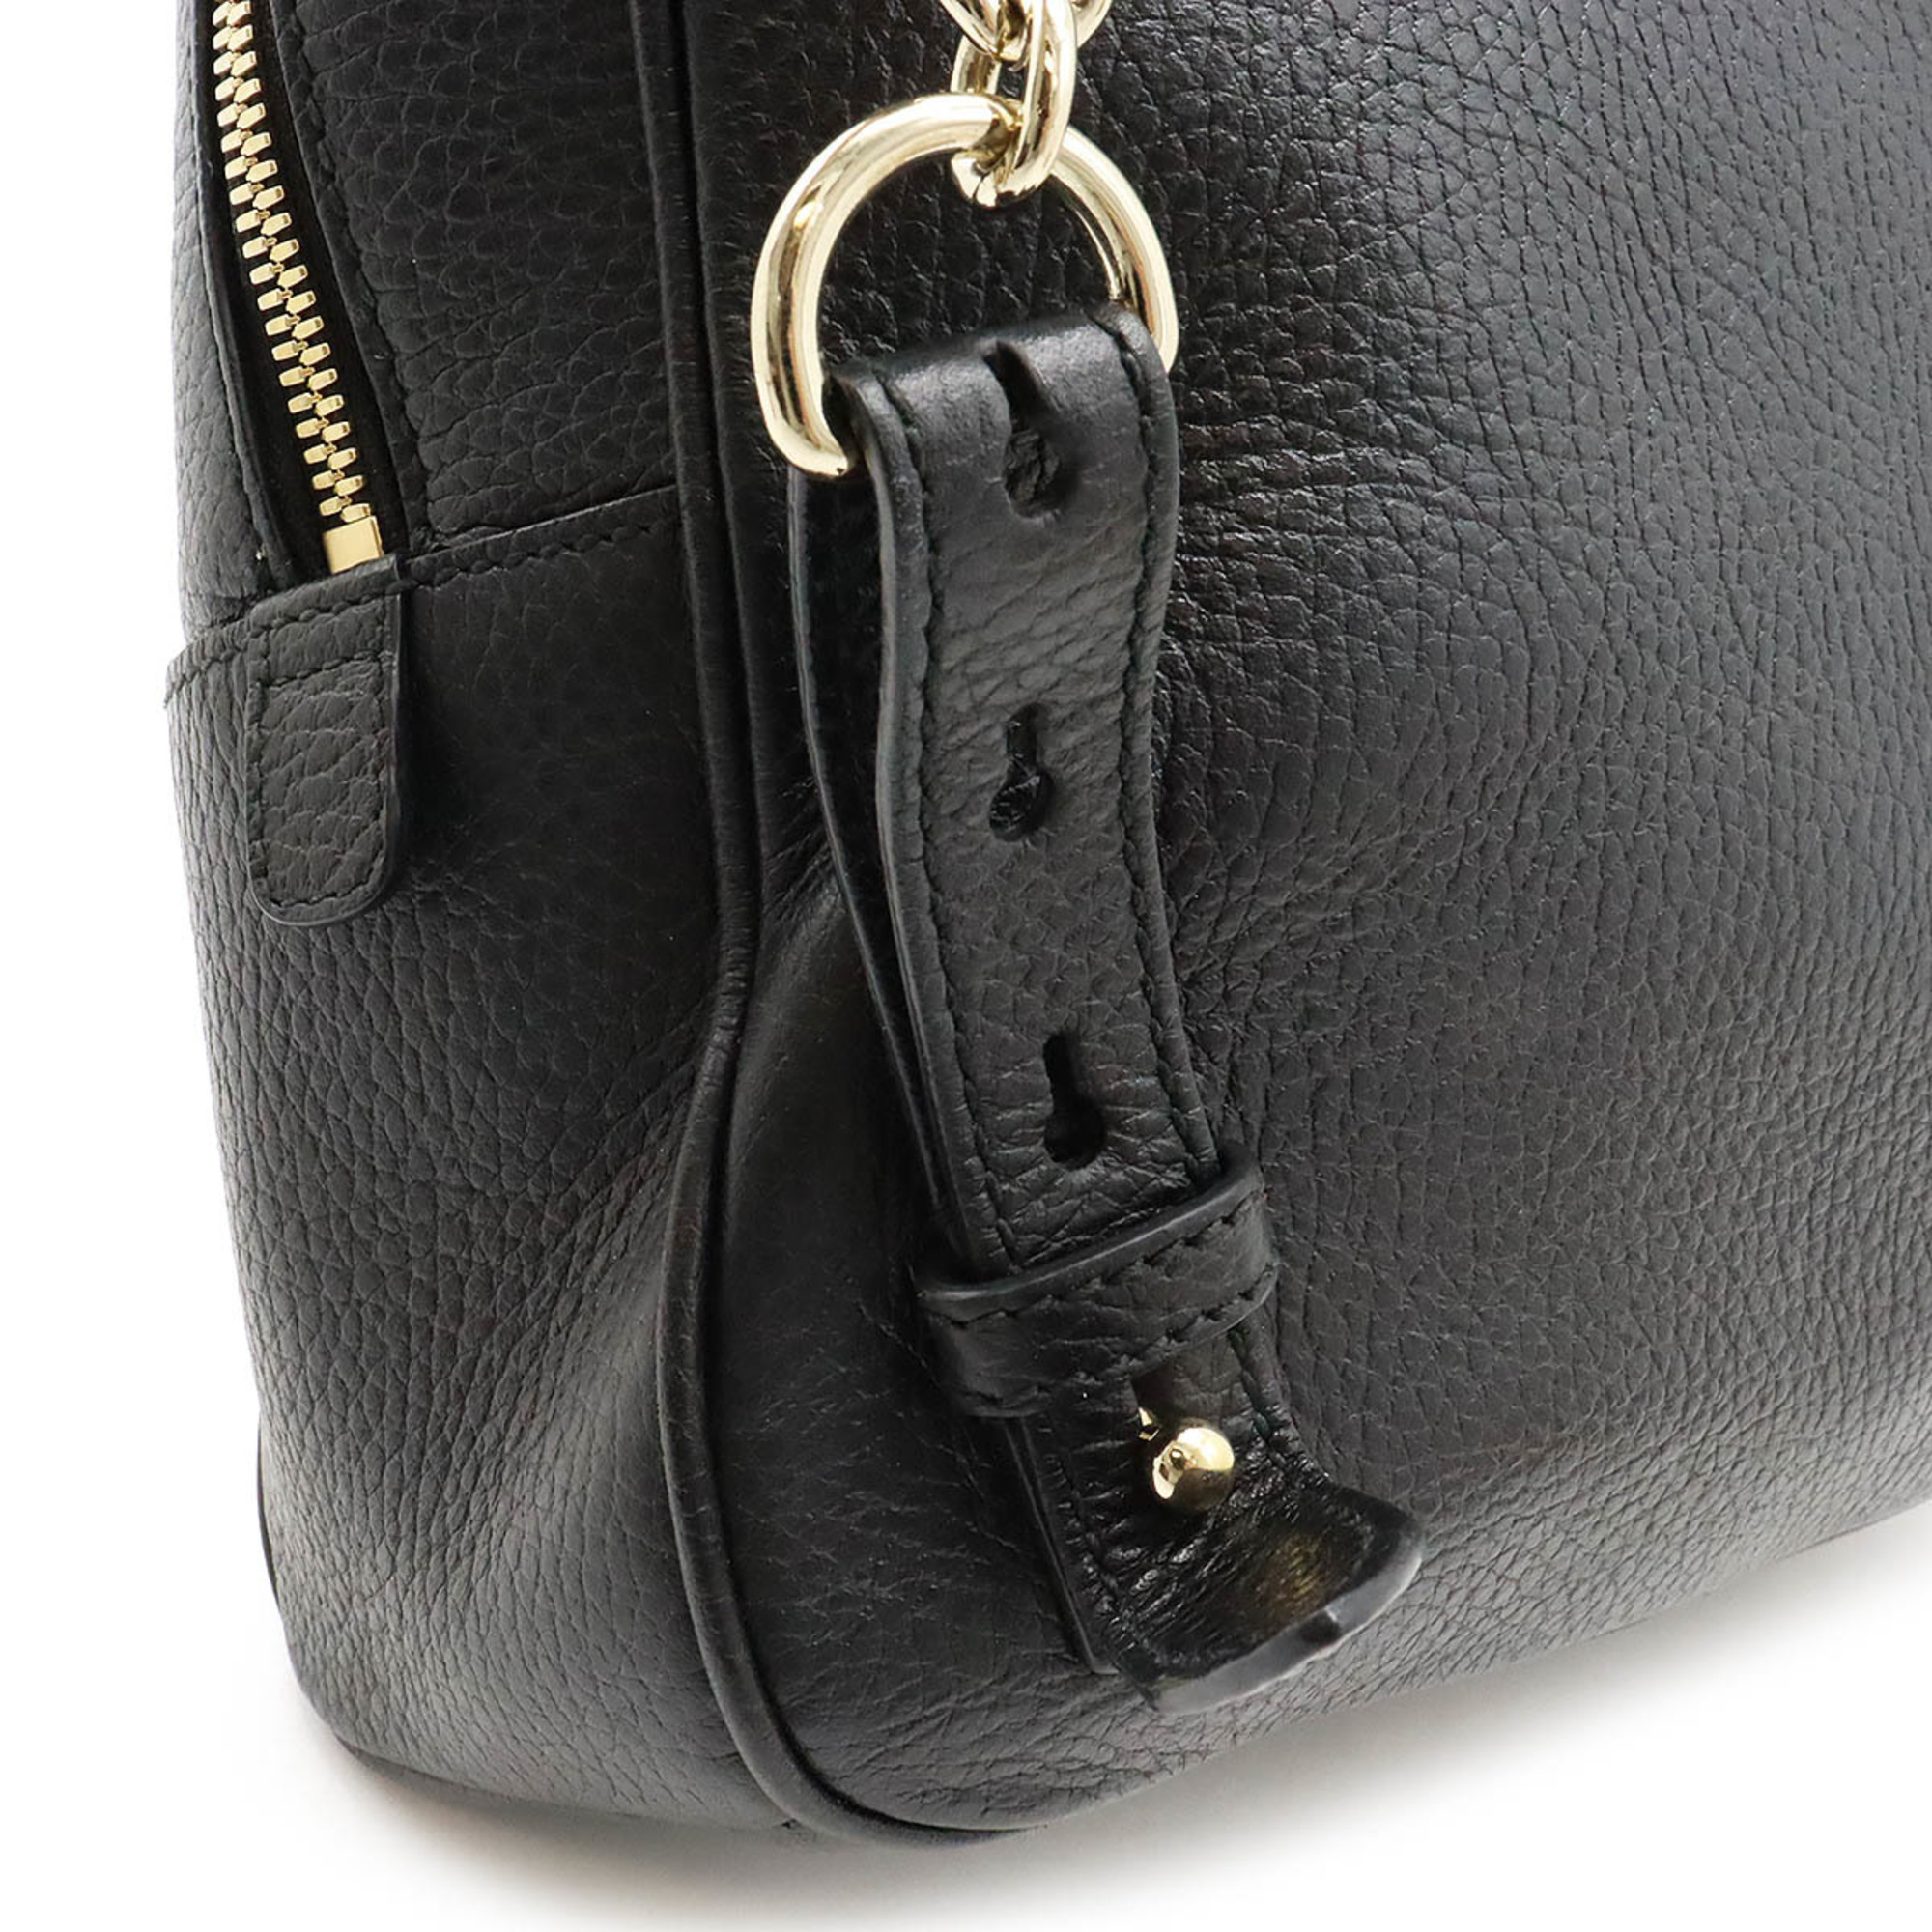 GUCCI Soho Backpack, Chain Shoulder, Leather, Black, 536192